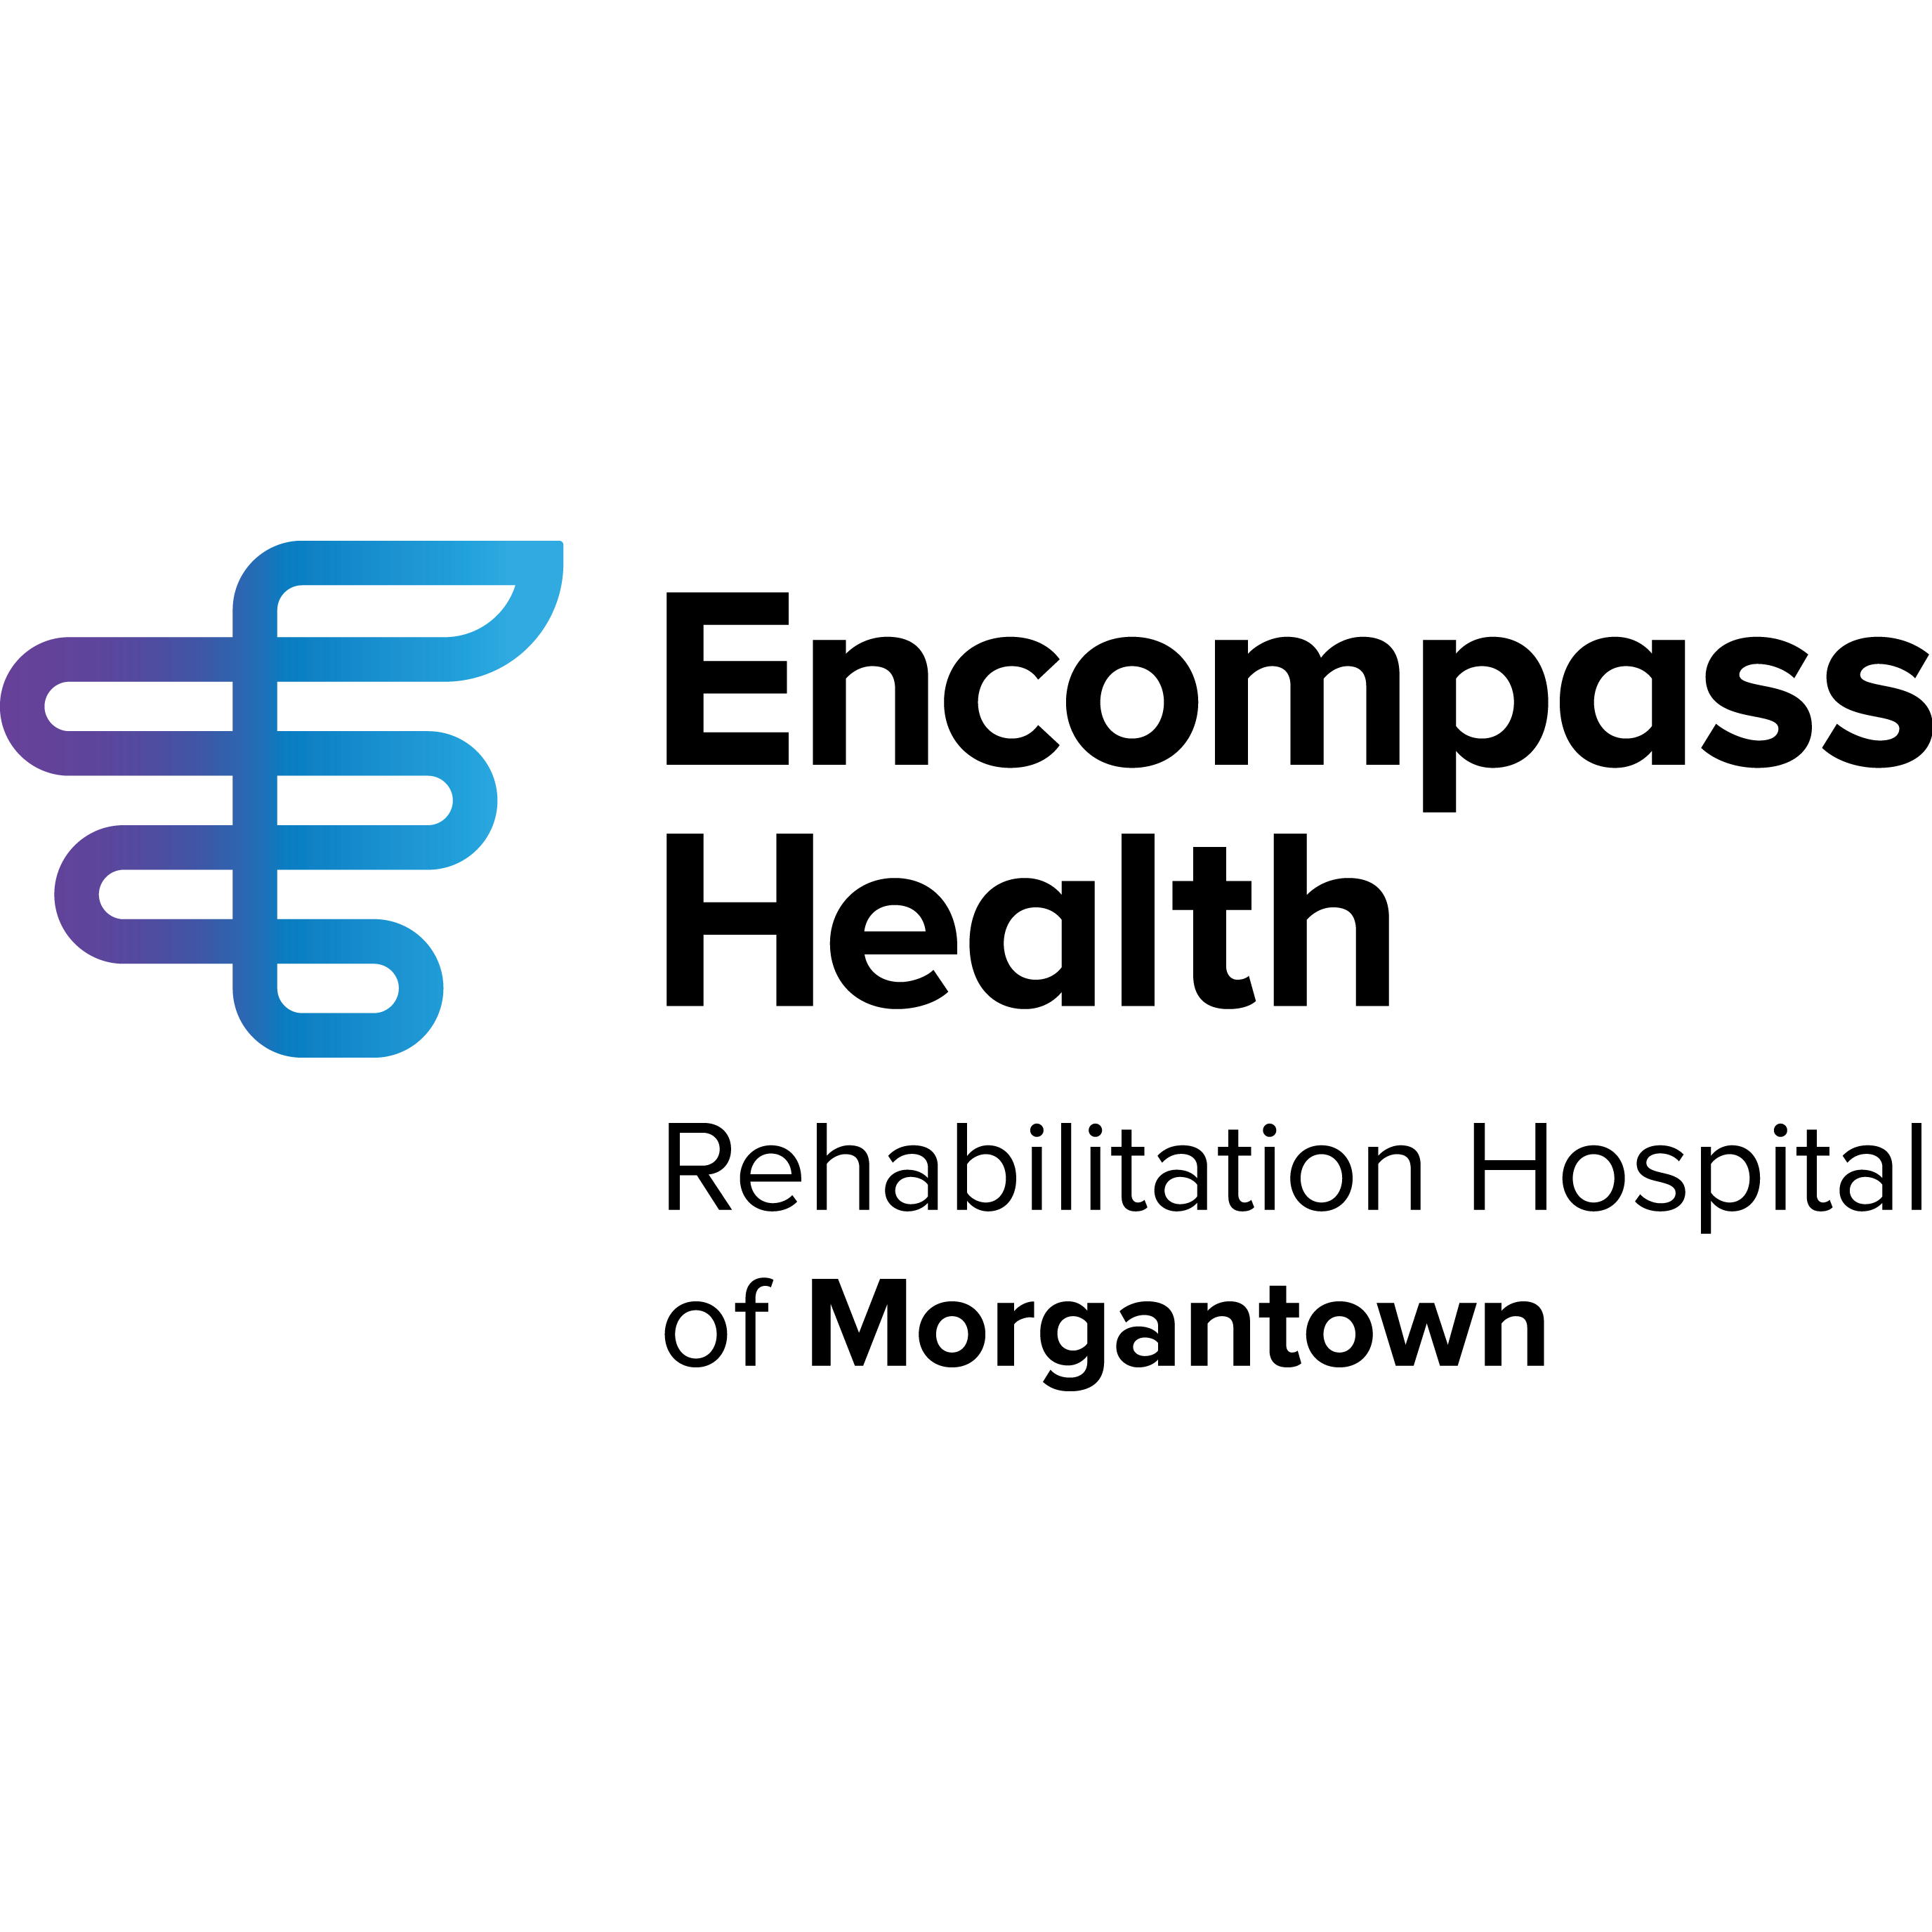 Encompass Health Rehabilitation Hospital of Morgantown